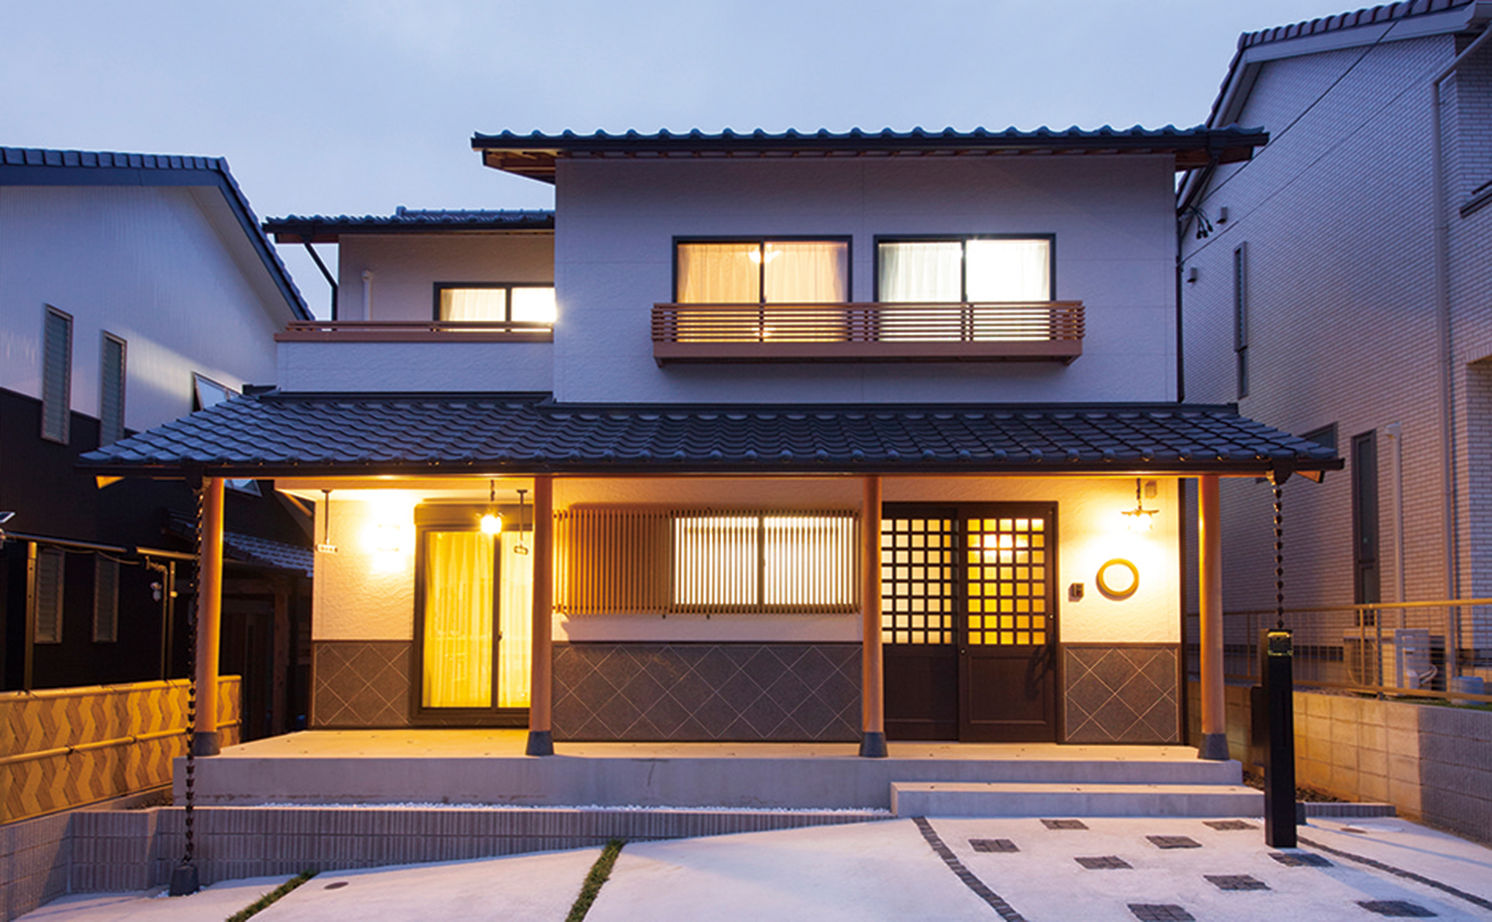 Suumo 和風 2113万円 間取図あり ギャラリーを見て和風に 最高の住み心地です 古民家風 土間のある家 アイムの家 未来創建 の建築実例詳細 注文住宅